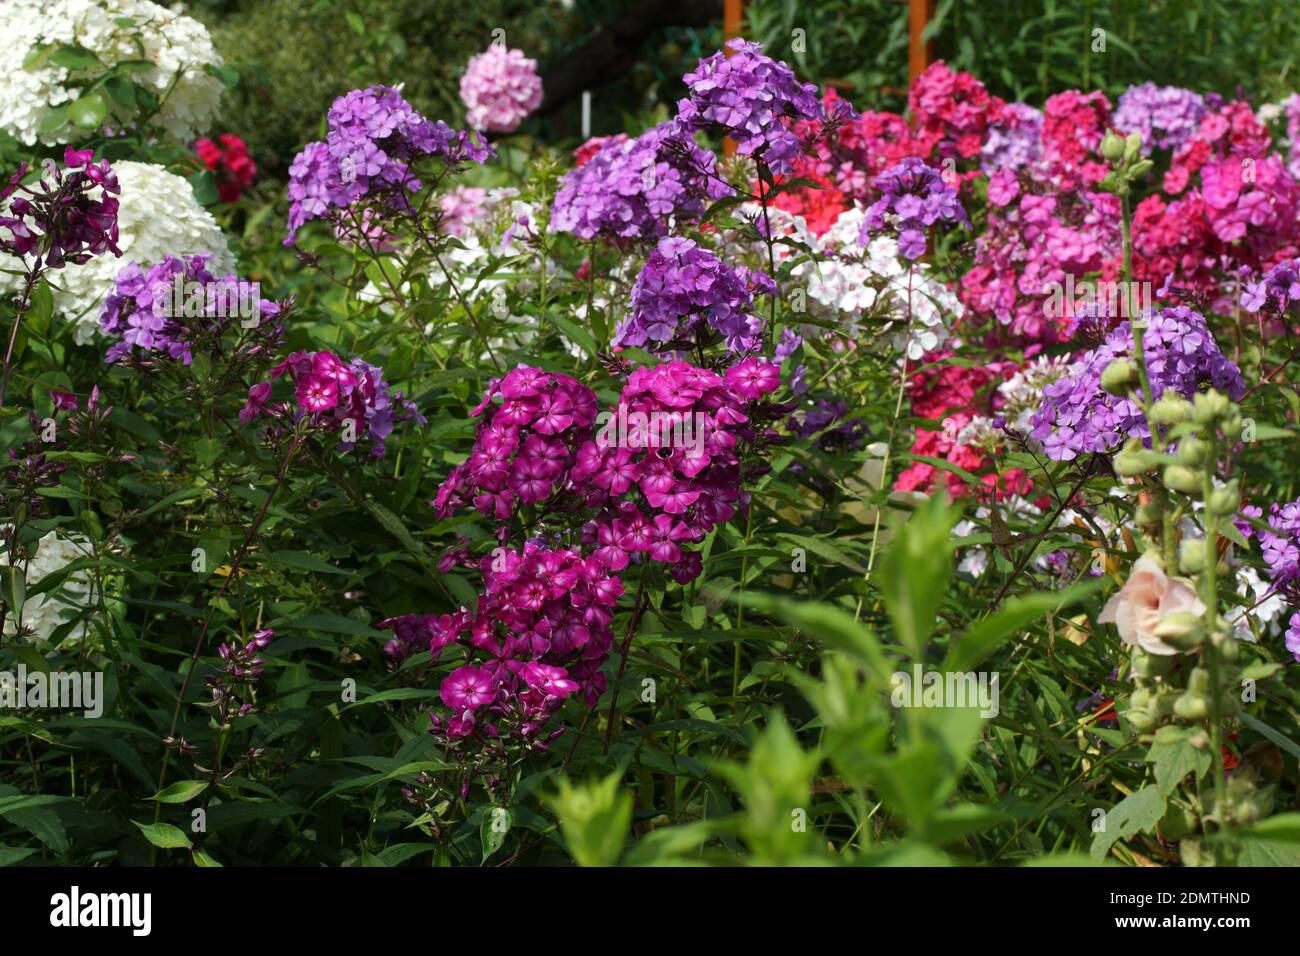 Multi-colored phlox in the photo. Phlox paniculata, fall phlox, garden phlox, perennial phlox.  Fragment of a summer garden in bloom. Stock Photo